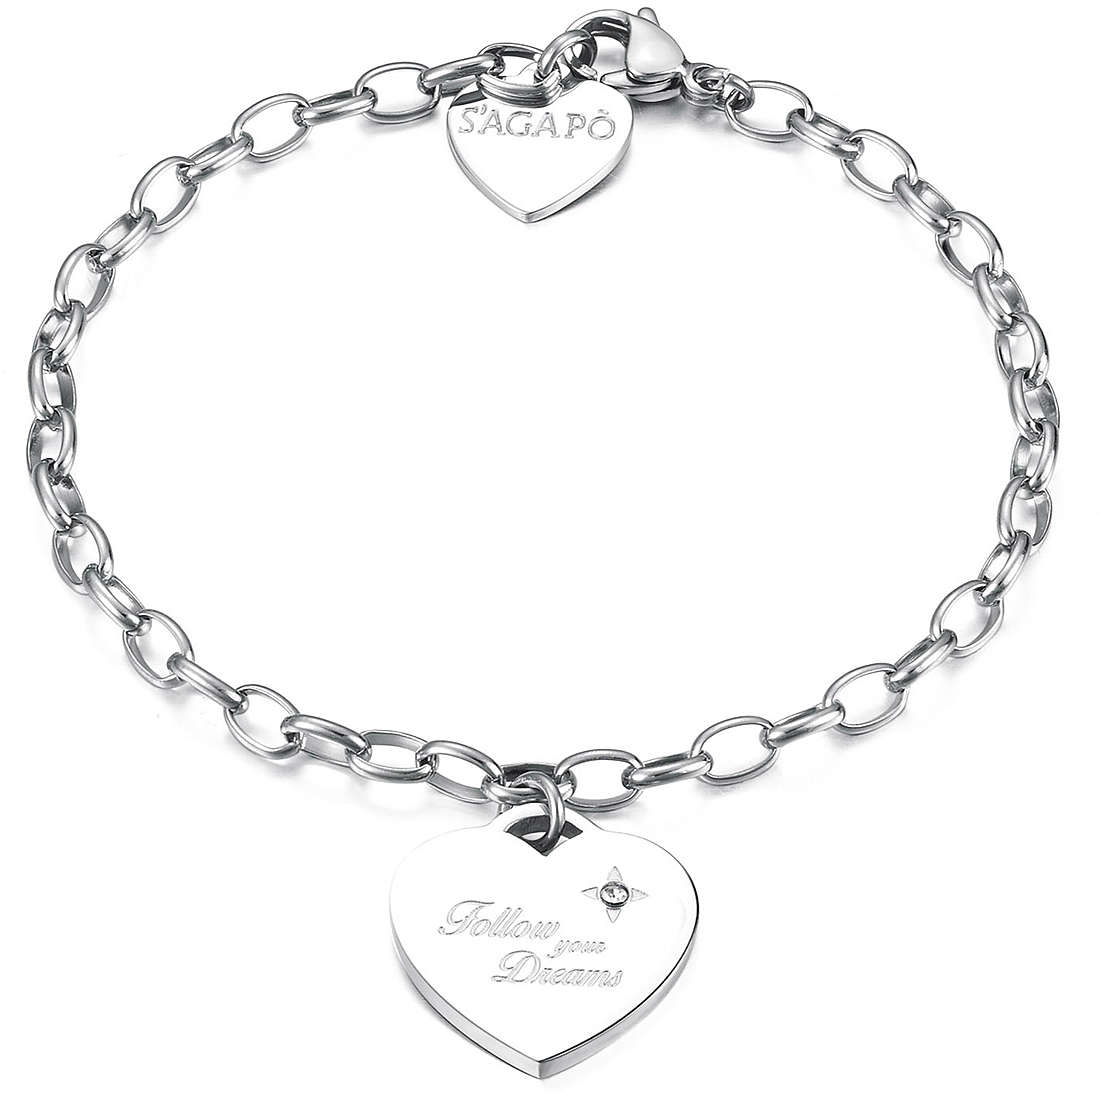 bracelet jewel Steel woman jewel Crystals SBM14